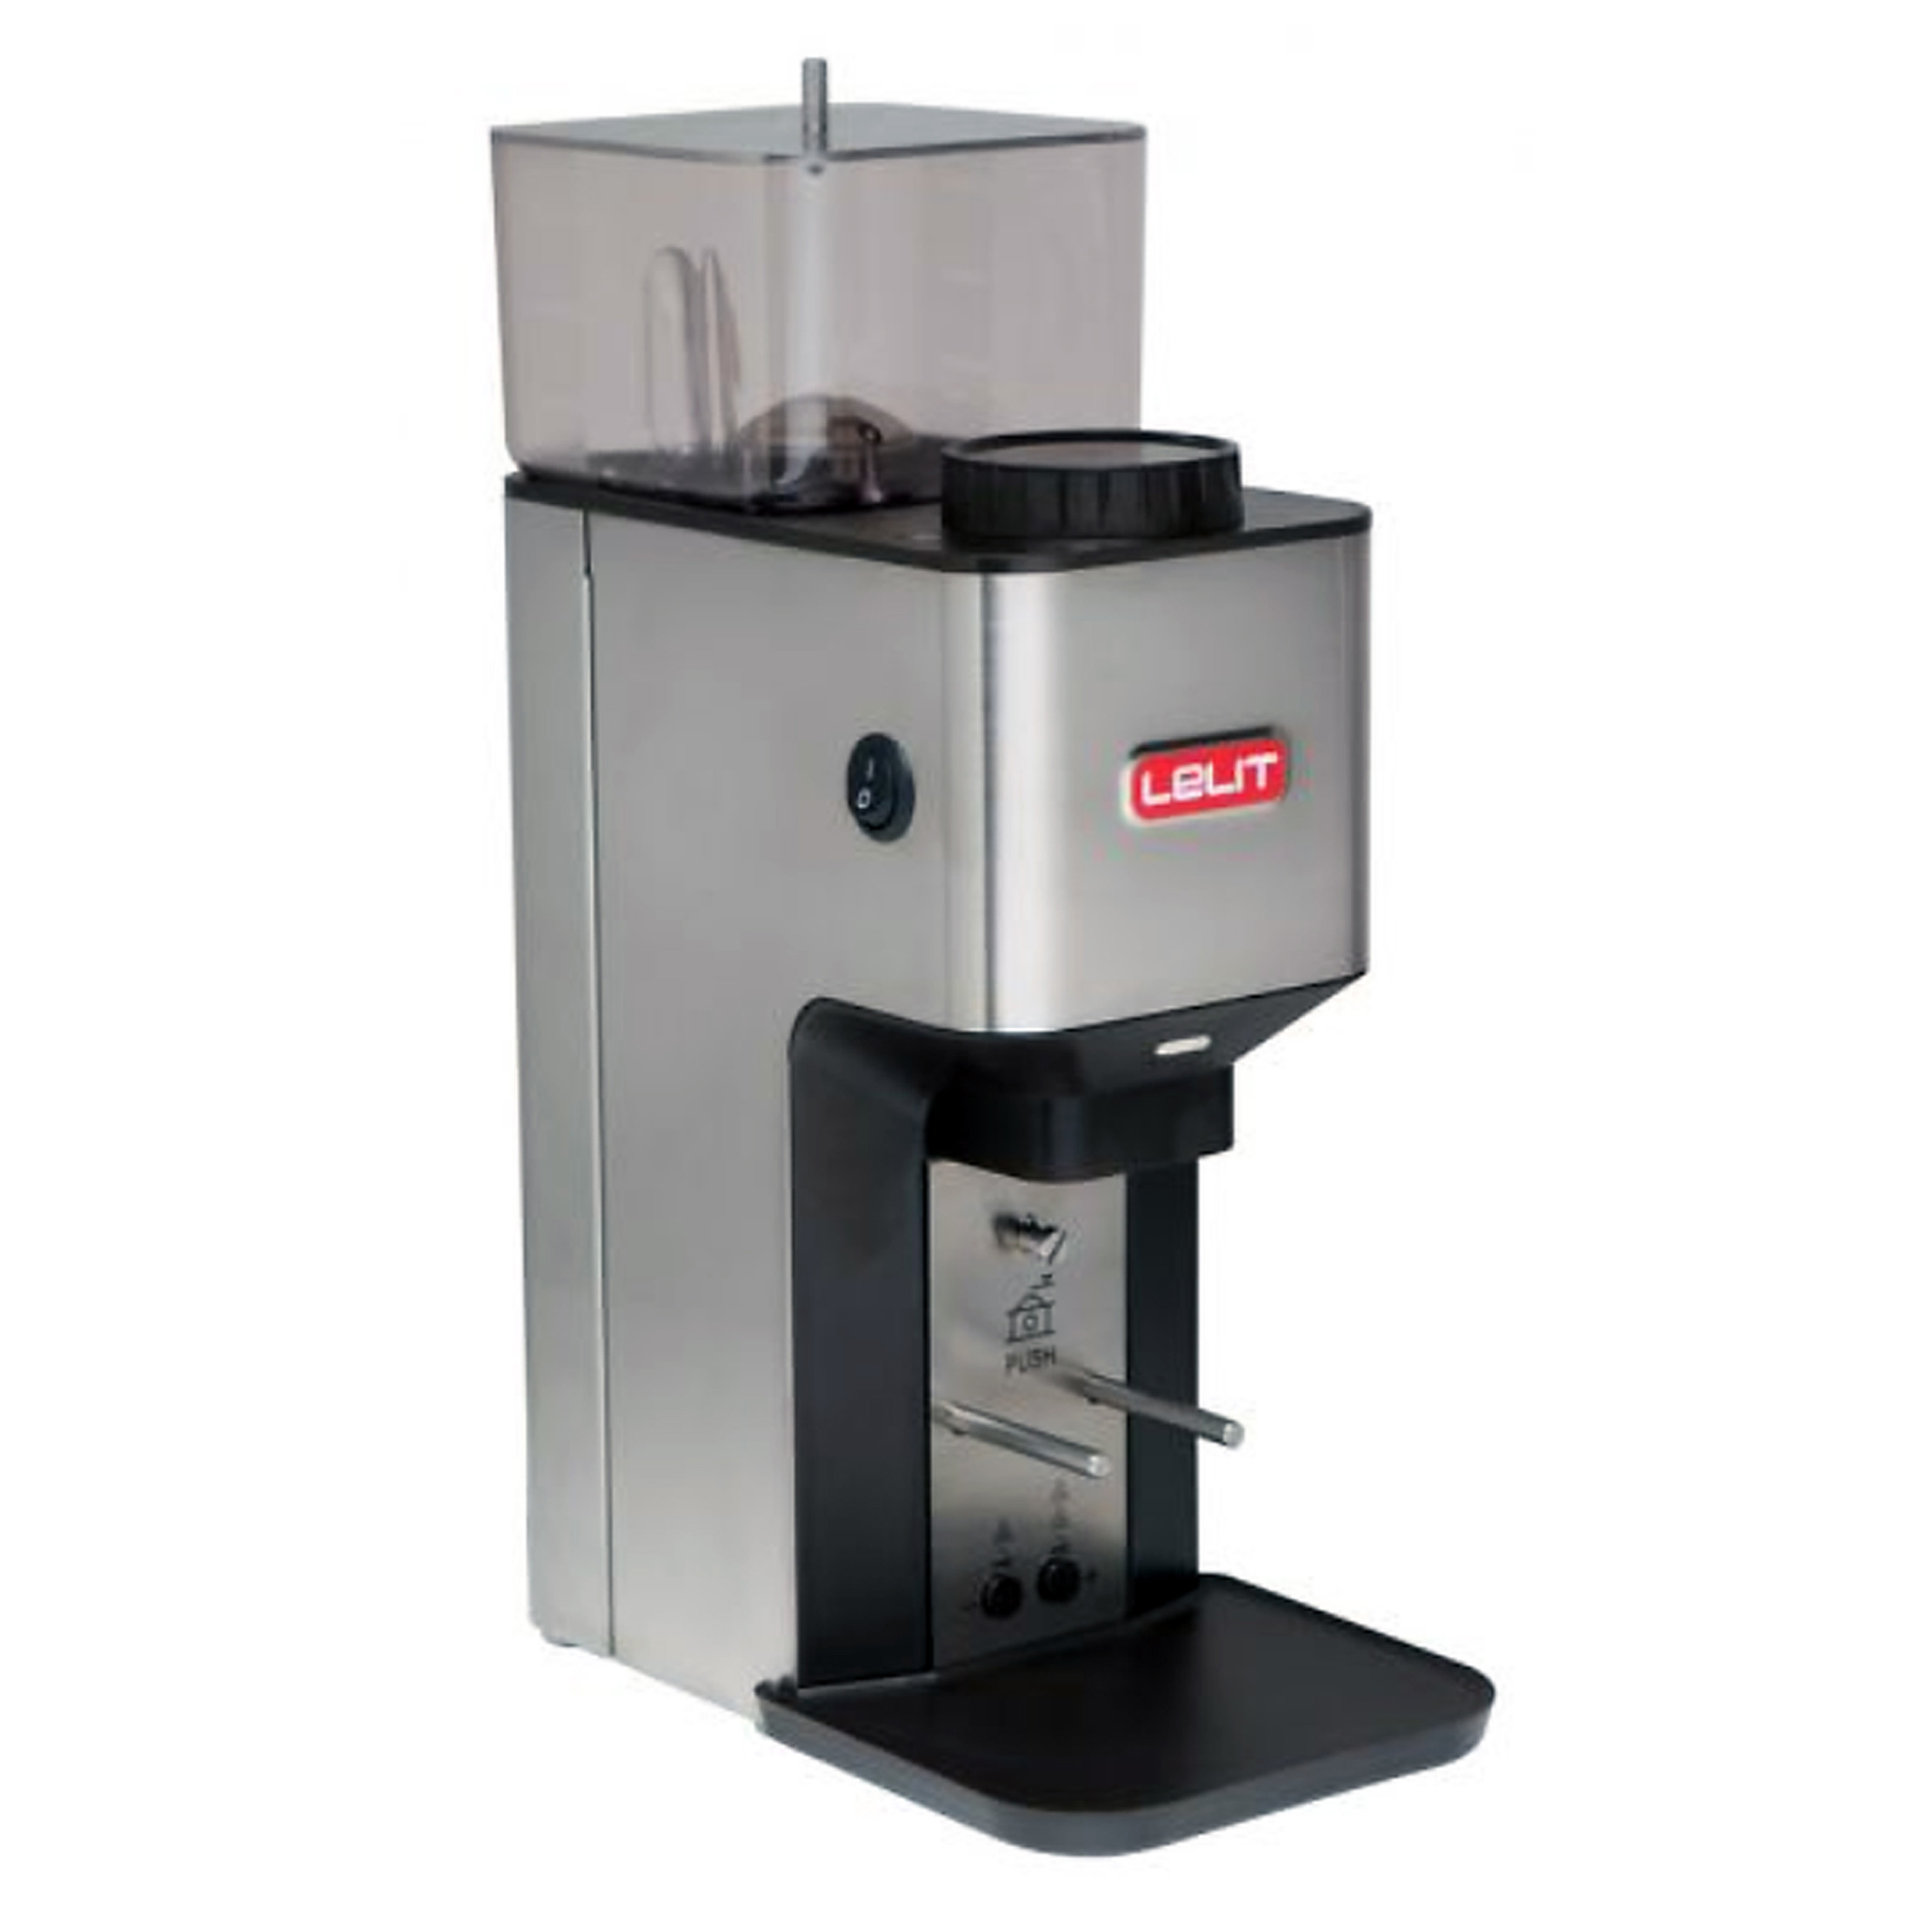 LELIT PL71 Kaffeemühle Kegelmahlwerk) (270 Edelstahl W